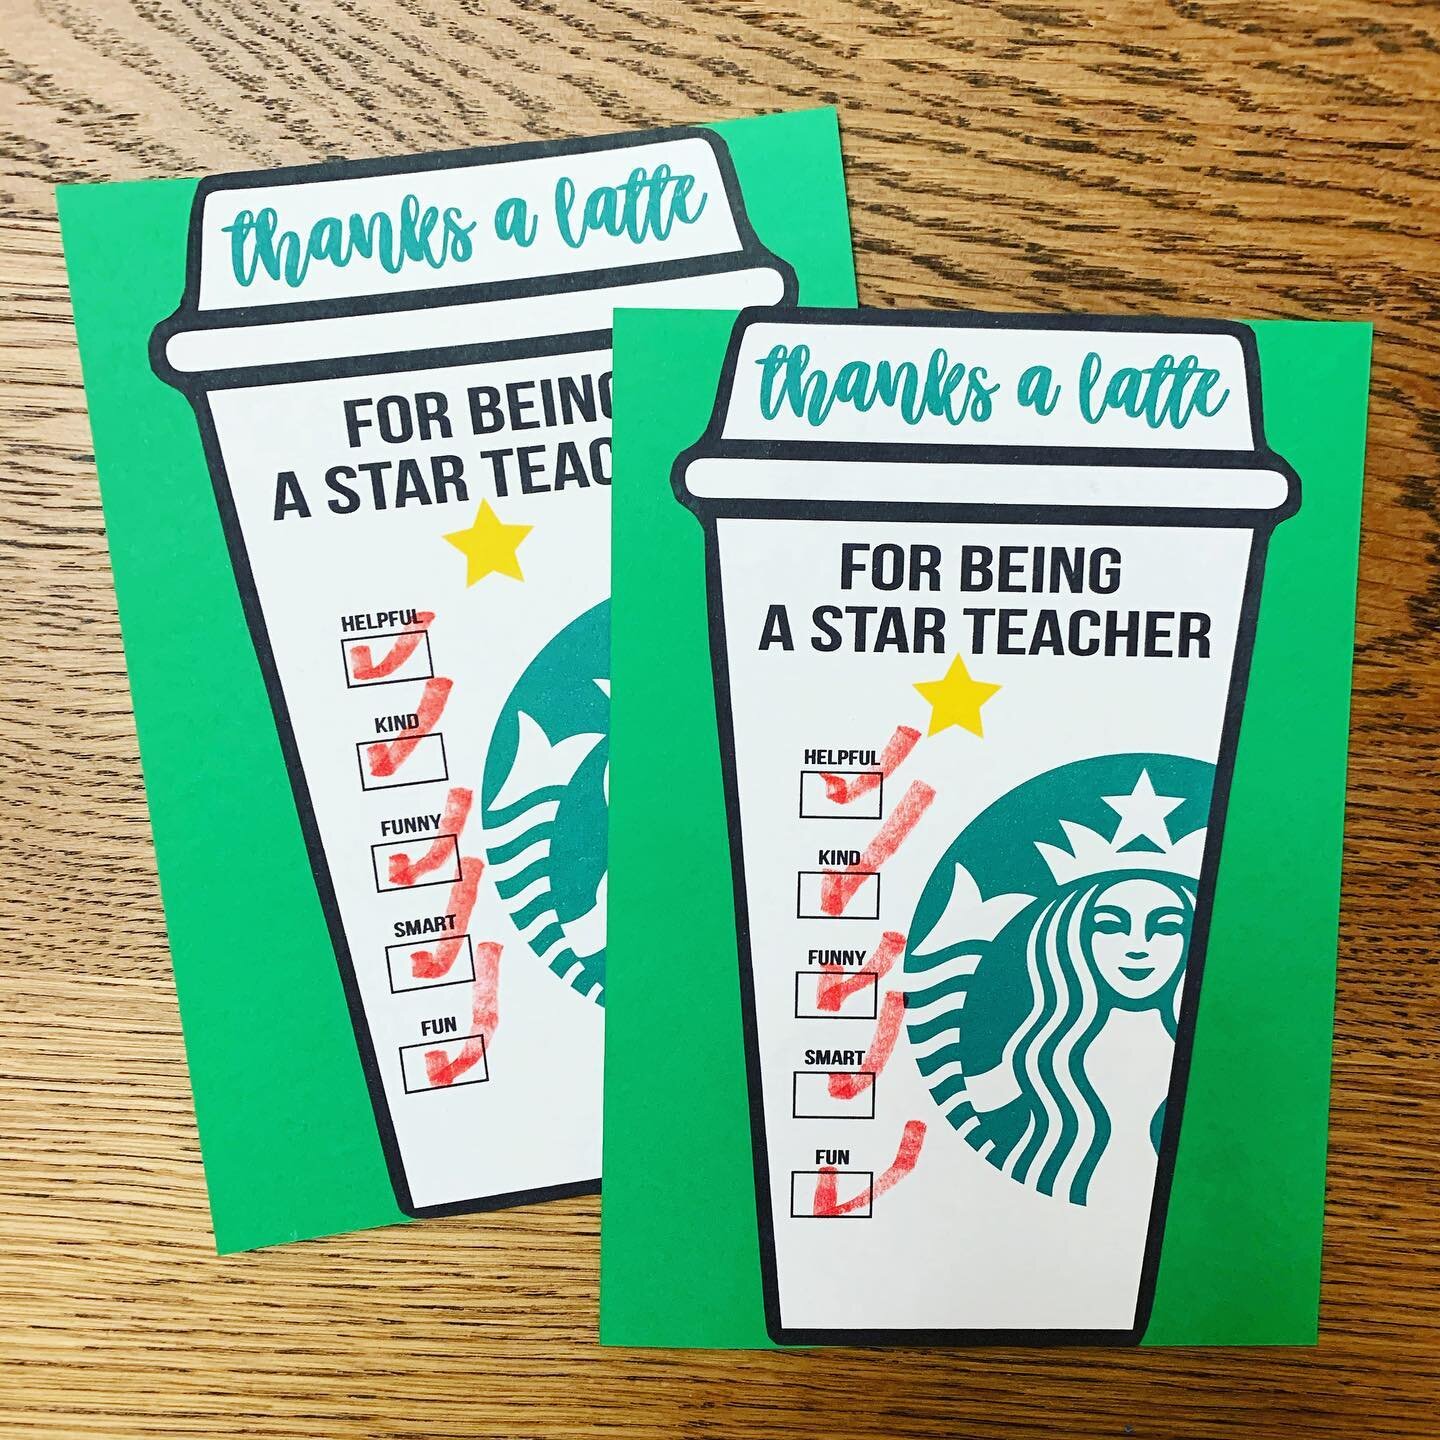 Thanks A Latte teacher appreciation cards 💚☕️ 
:
:
#lunalilydesigns #graphicdesign #graphicdesigner #thankyoucard #teacherappreciation #holidays